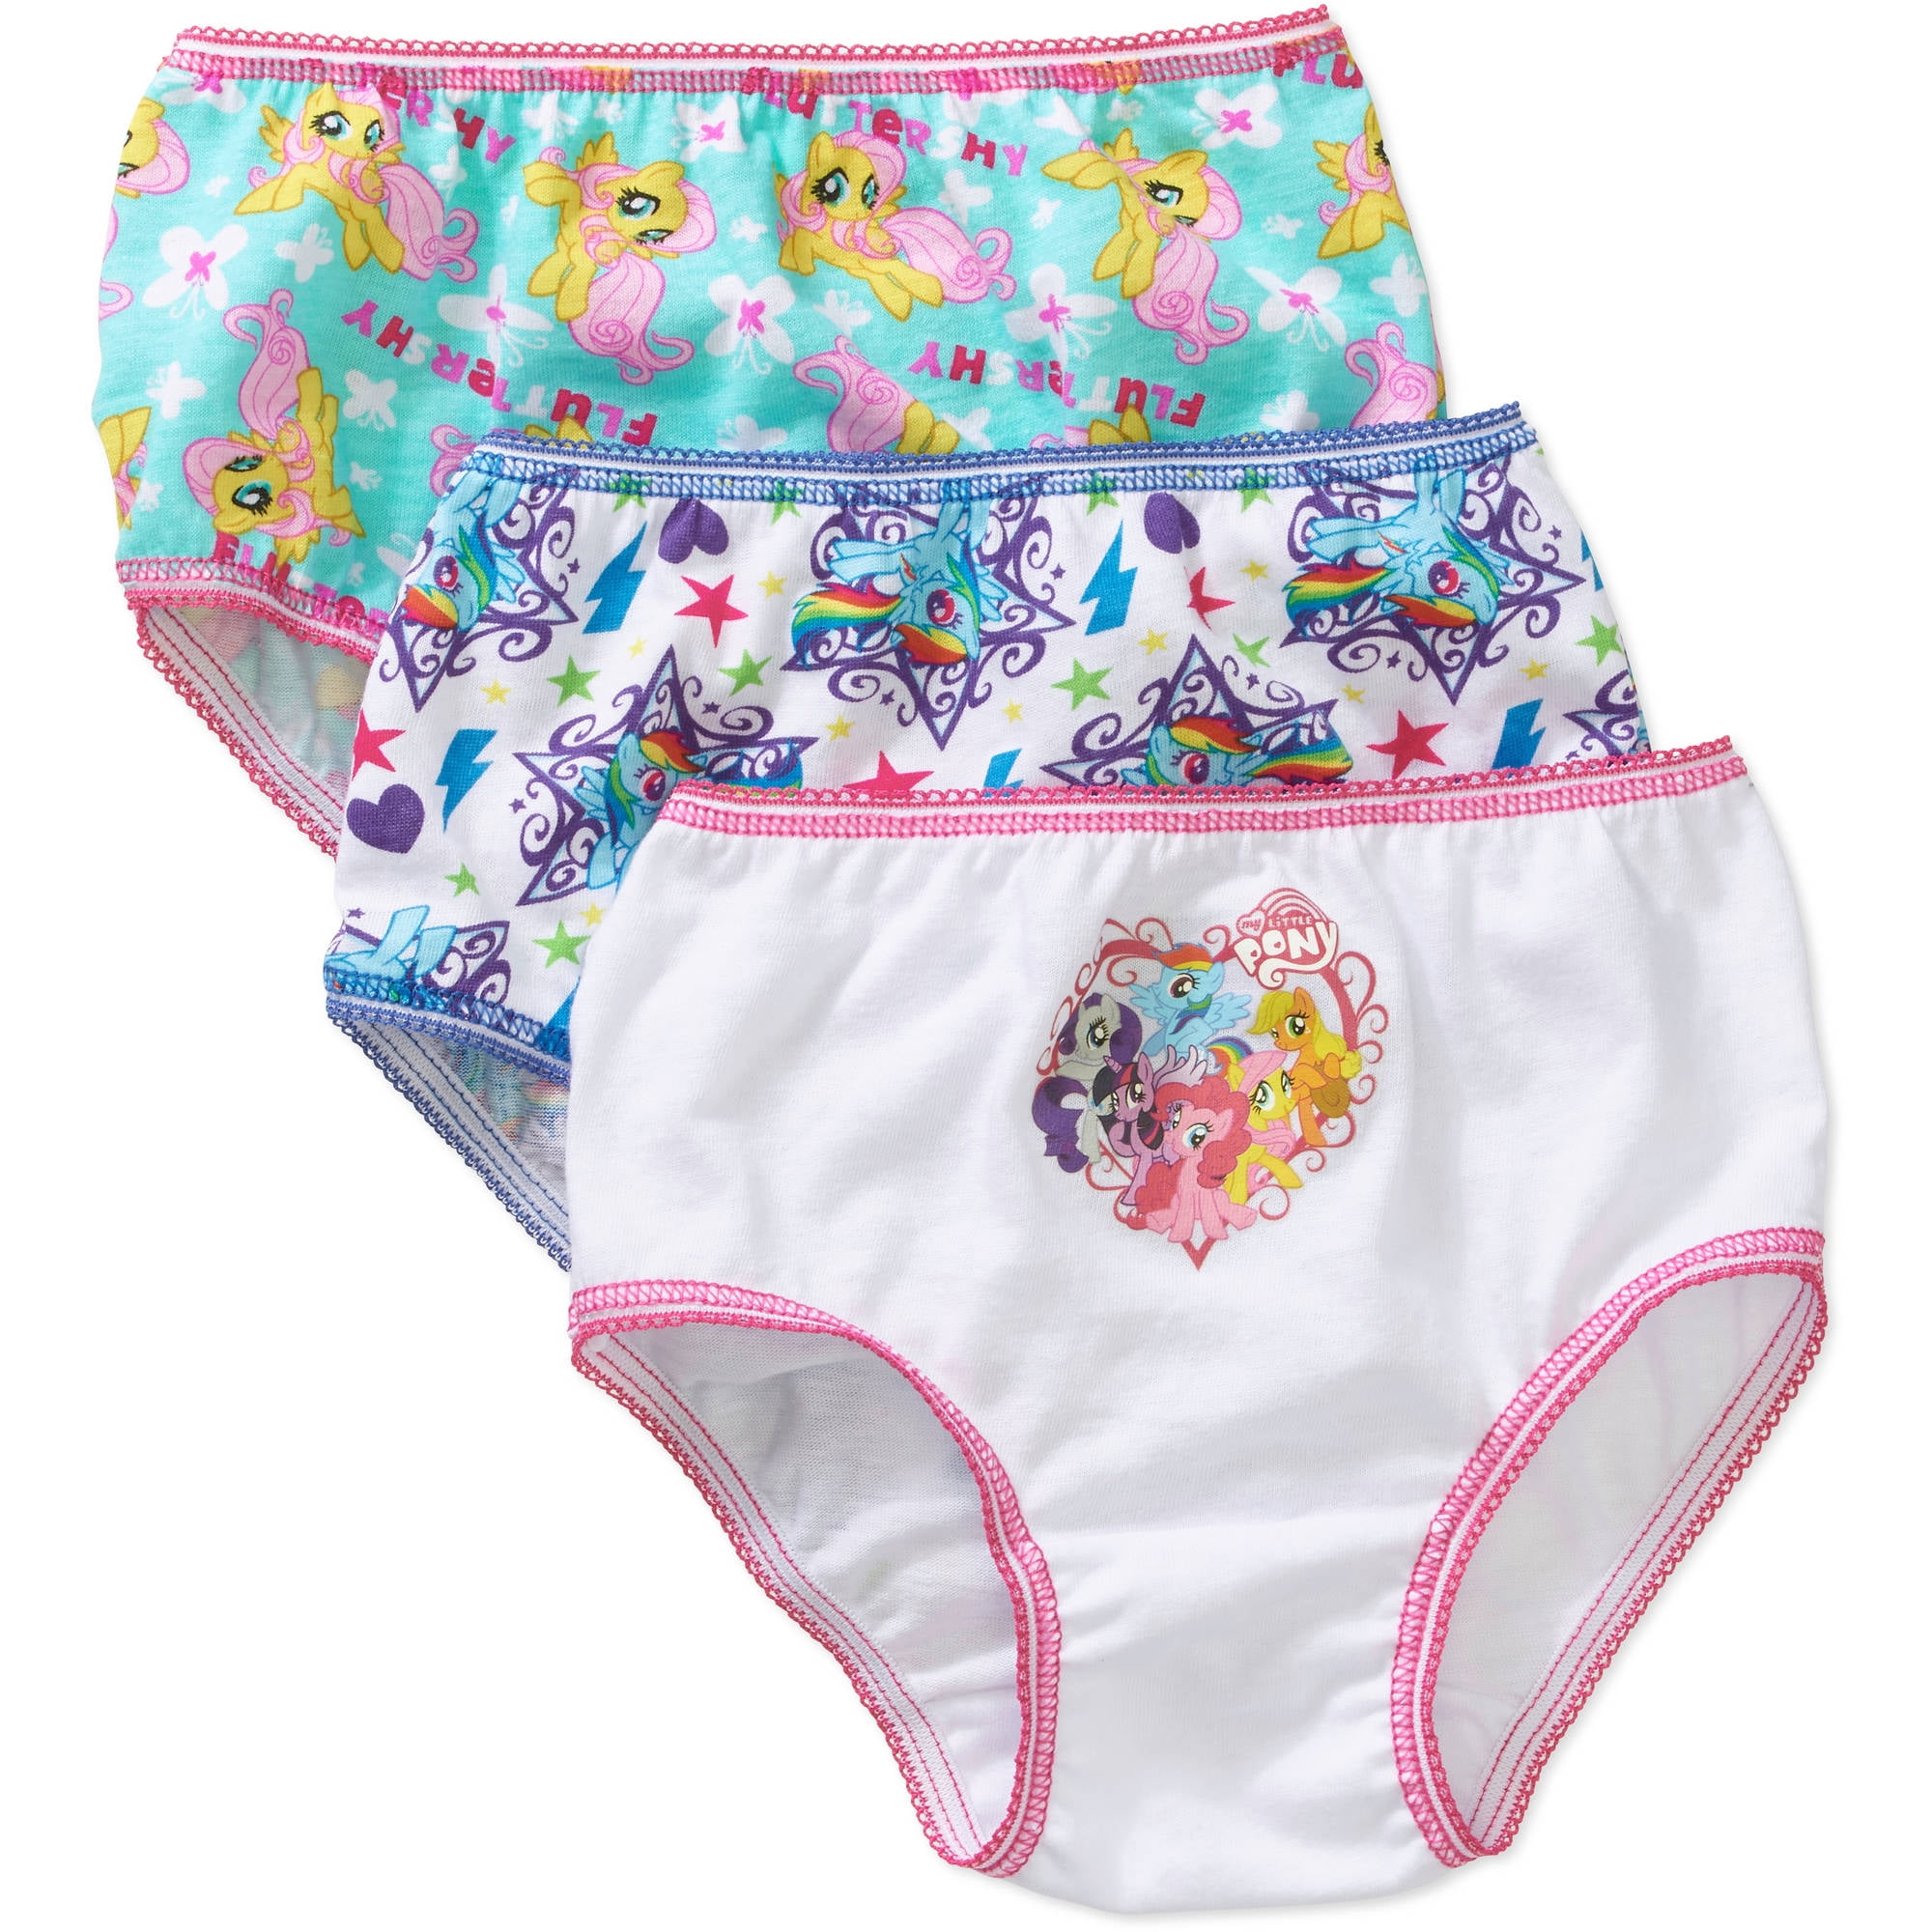 My Little Pony Underwear Panties, 3 Pack (Toddler Girls)